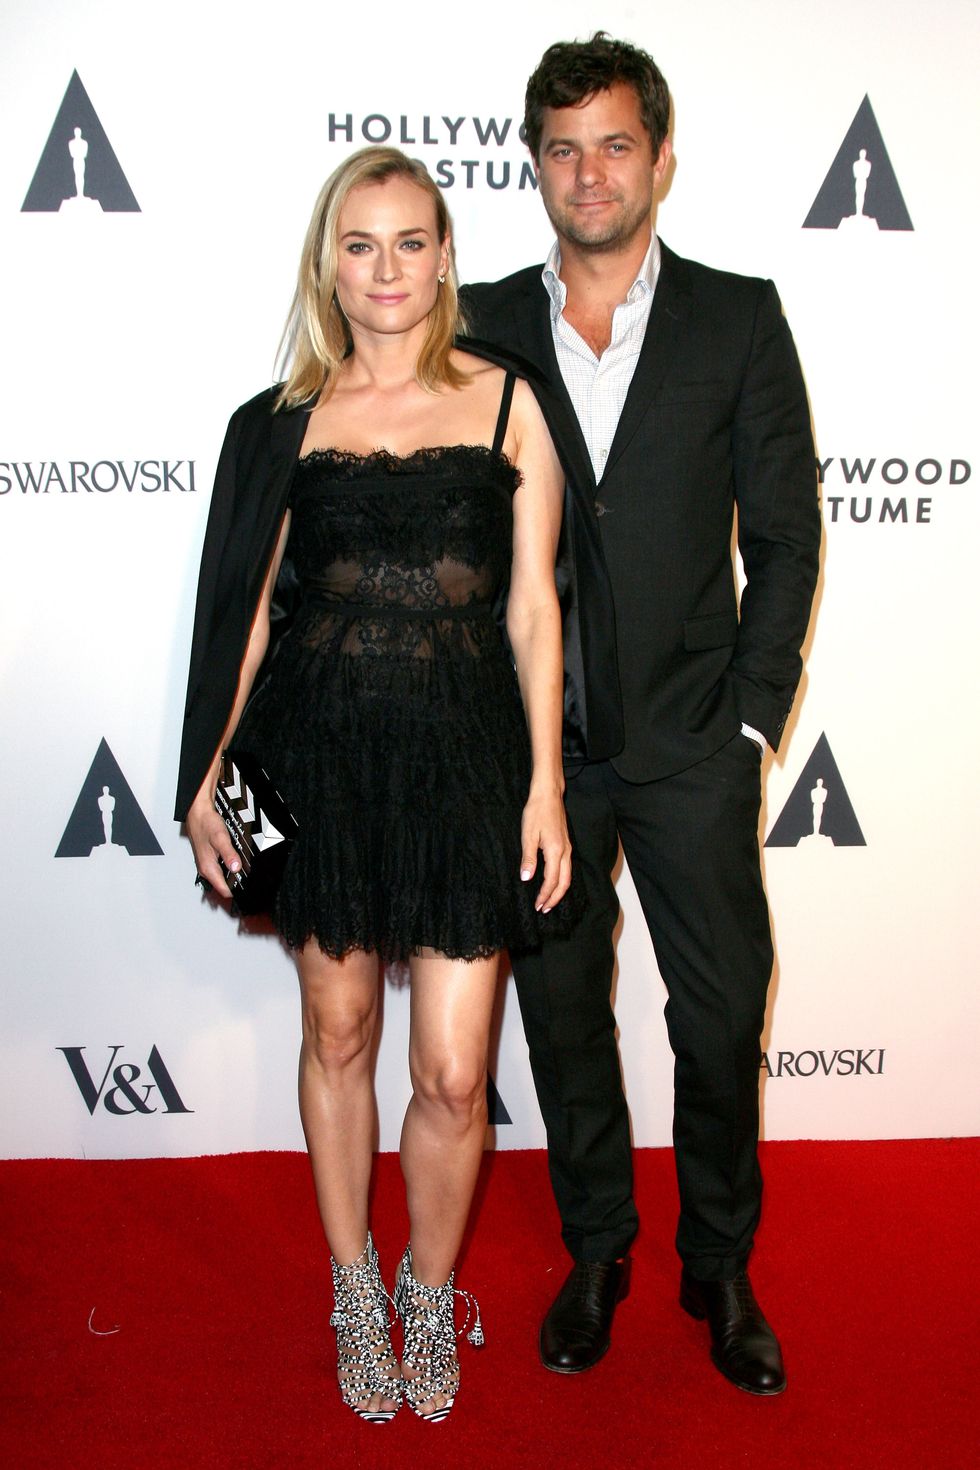 Diane Kruger and Joshua Jackson are Hollywood's most stylish couple